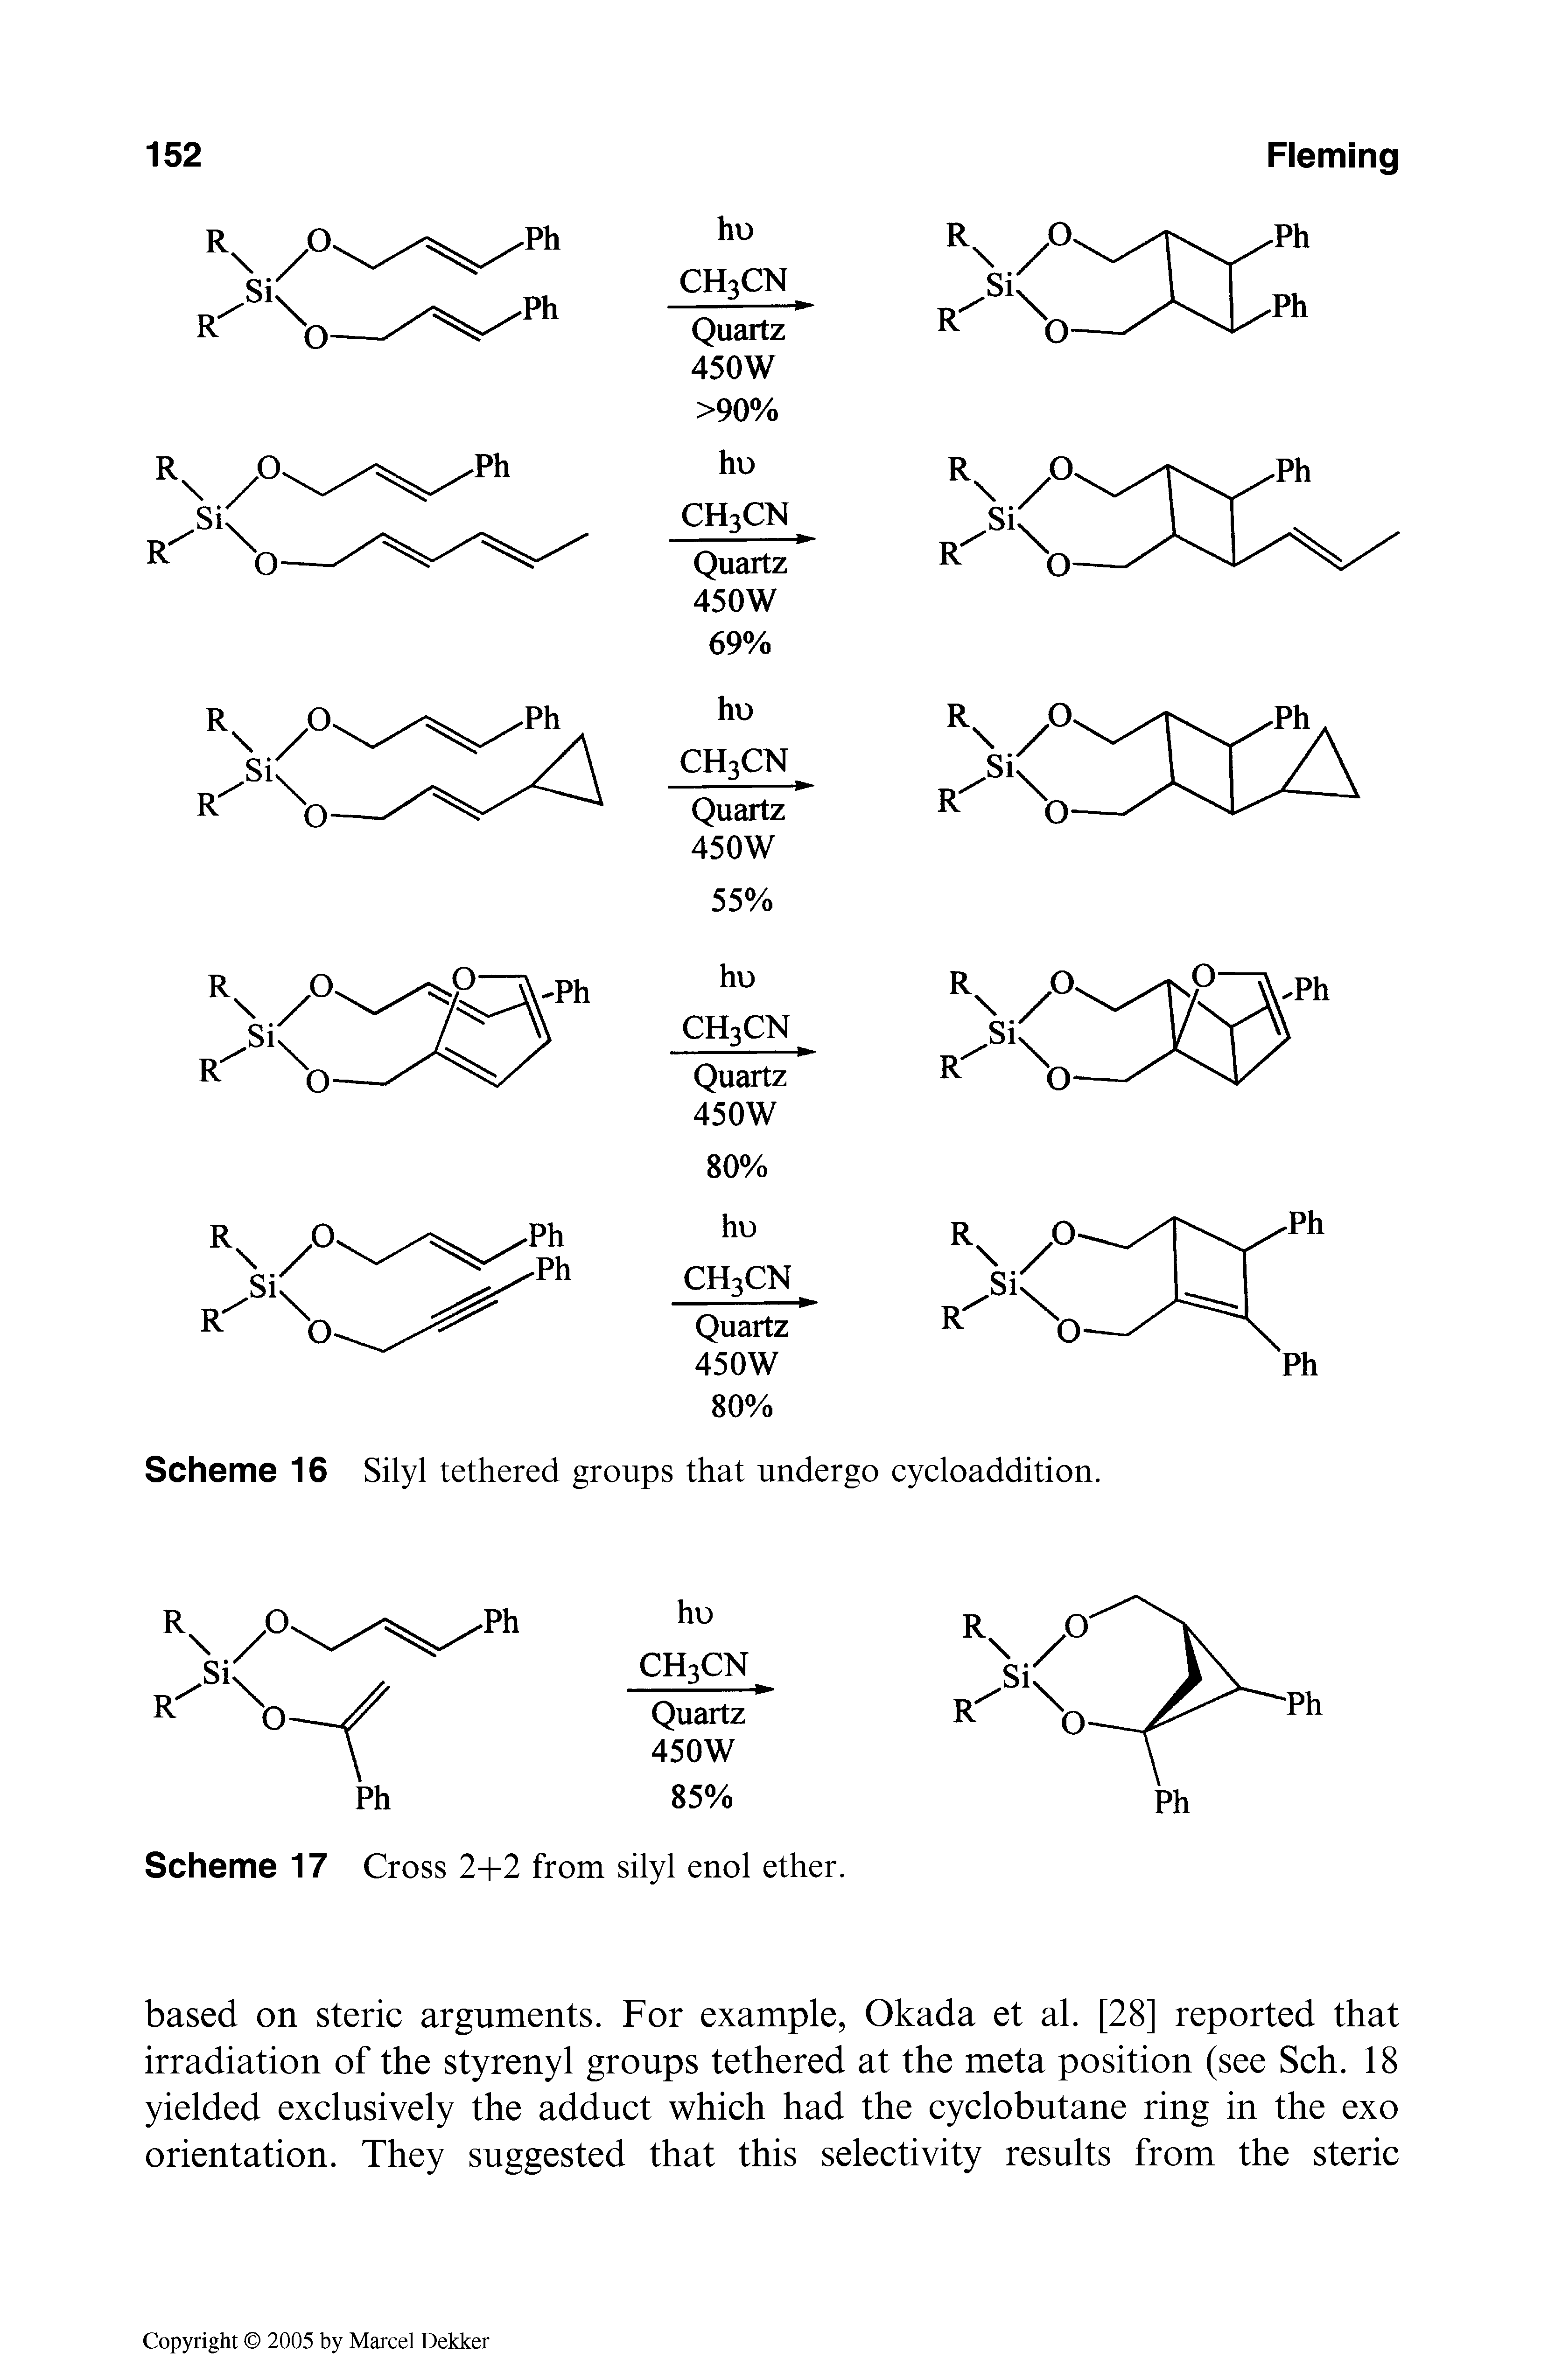 Scheme 17 Cross 2+2 from silyl enol ether.